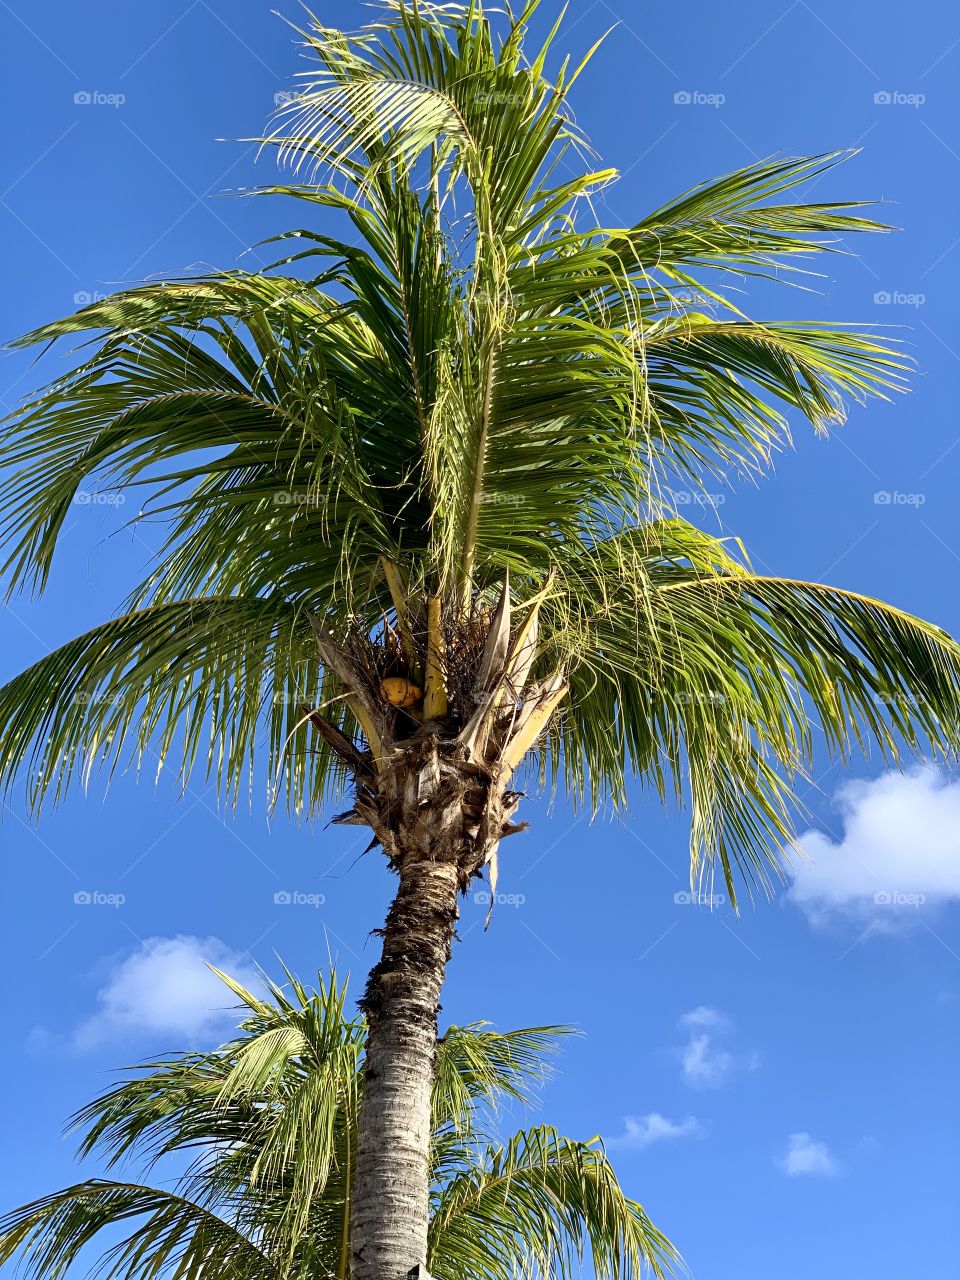 Underneath the palm tree